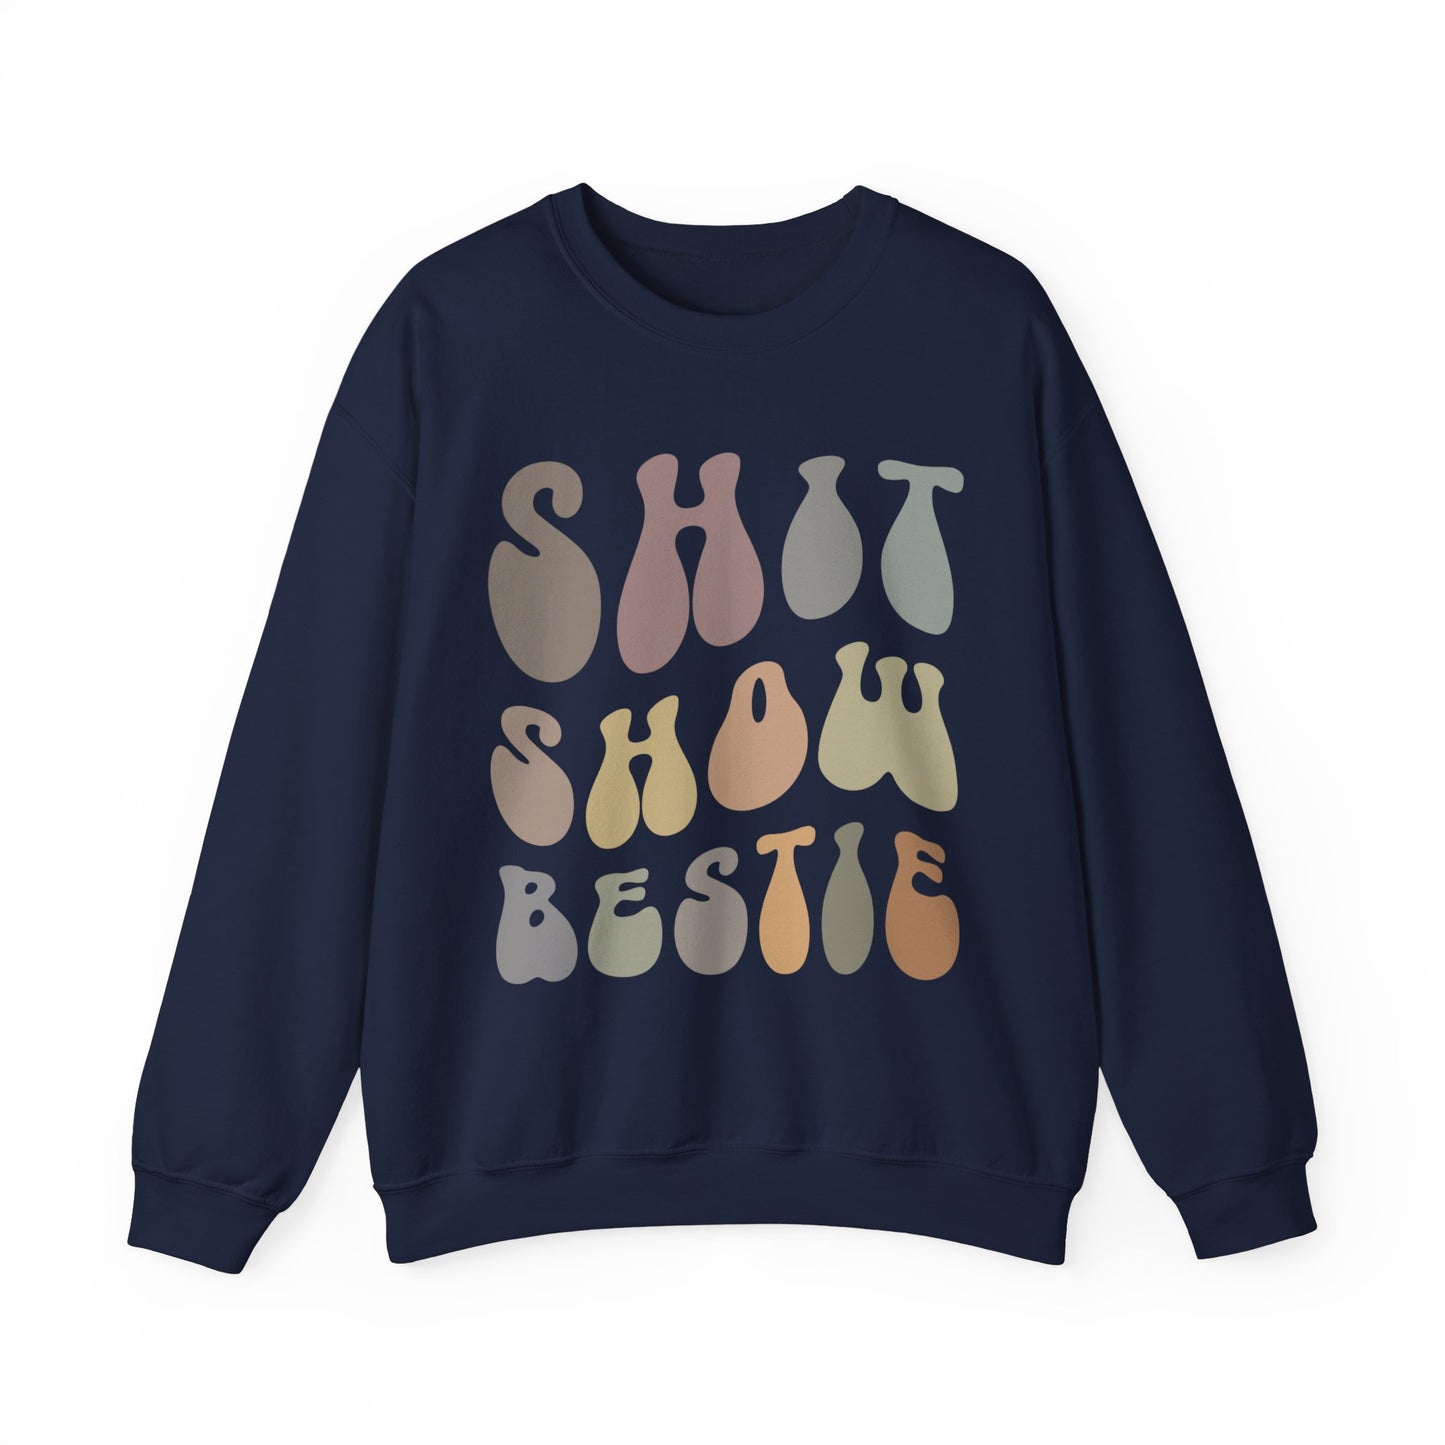 Shit Show Bestie Sweatshirt, BFF Sweatshirt for Women, Funny Best Friend Sweatshirt, Forever Bestie Sweatshirt, Matching Besties, S1307